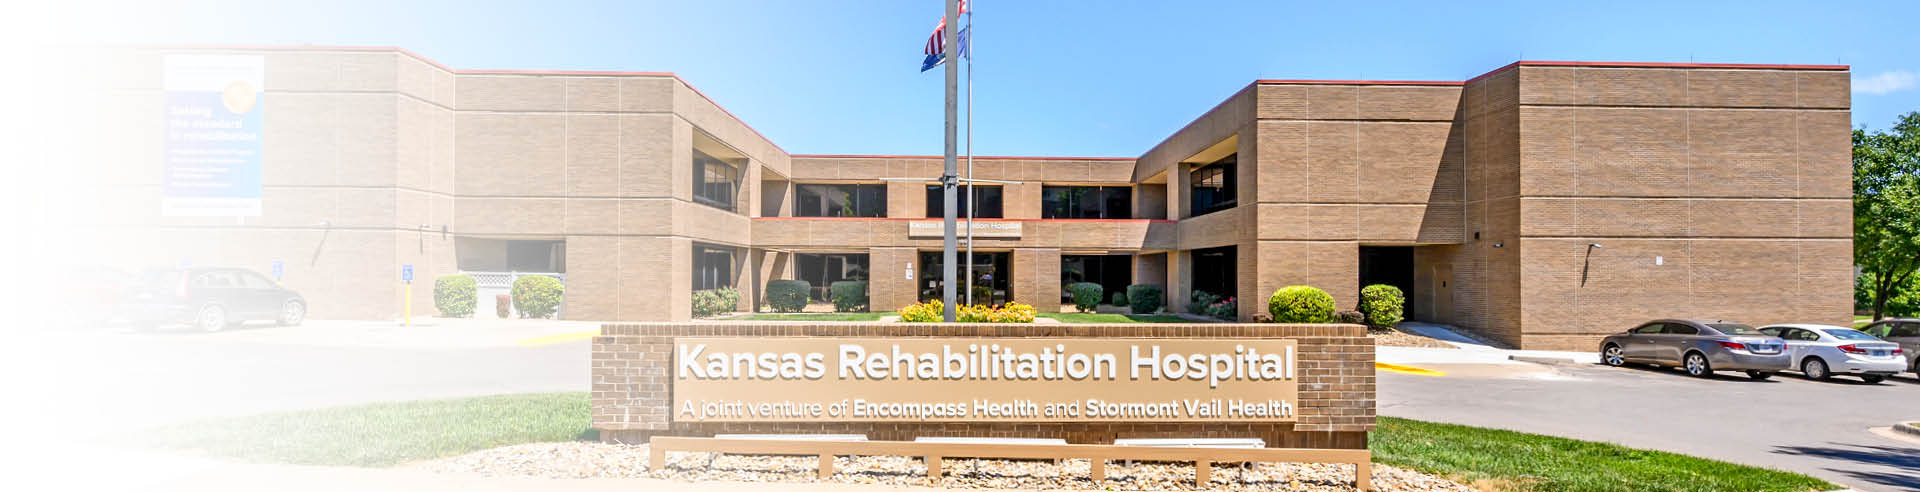 Kansas Rehabilitation Hospital exterior